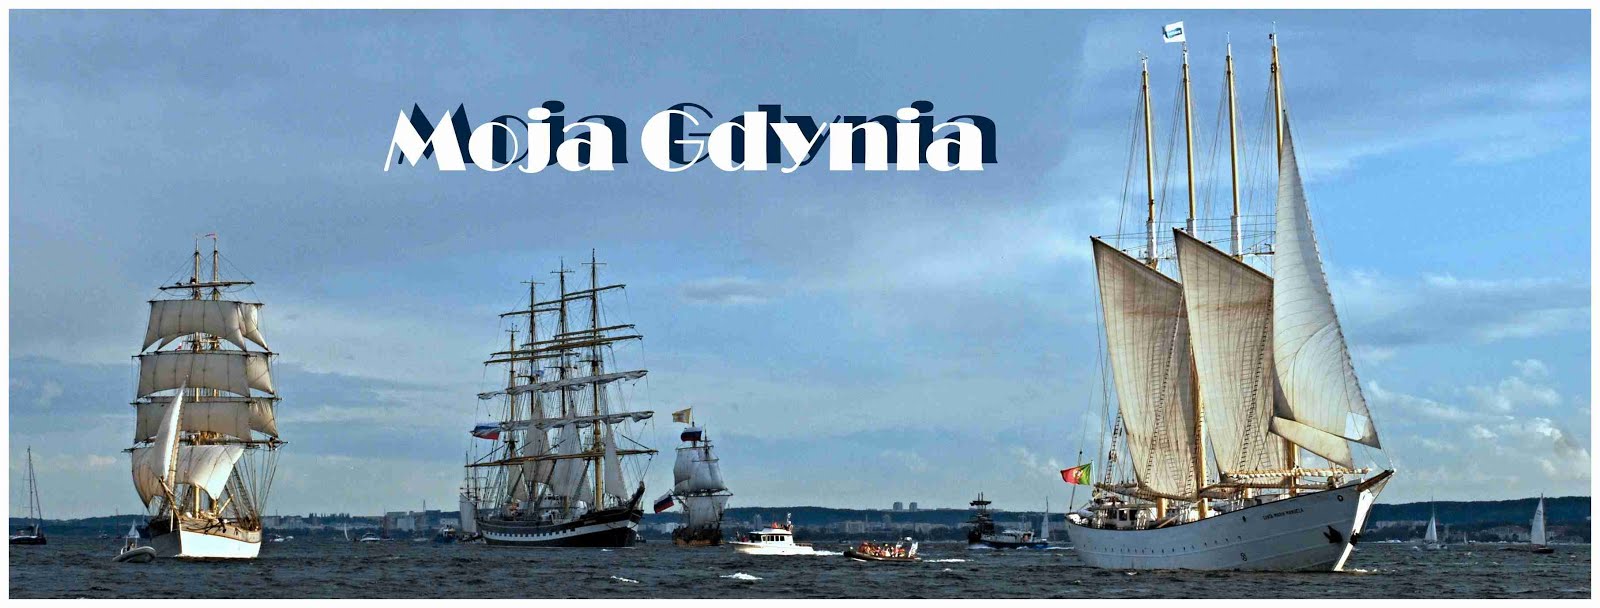 Moja Gdynia